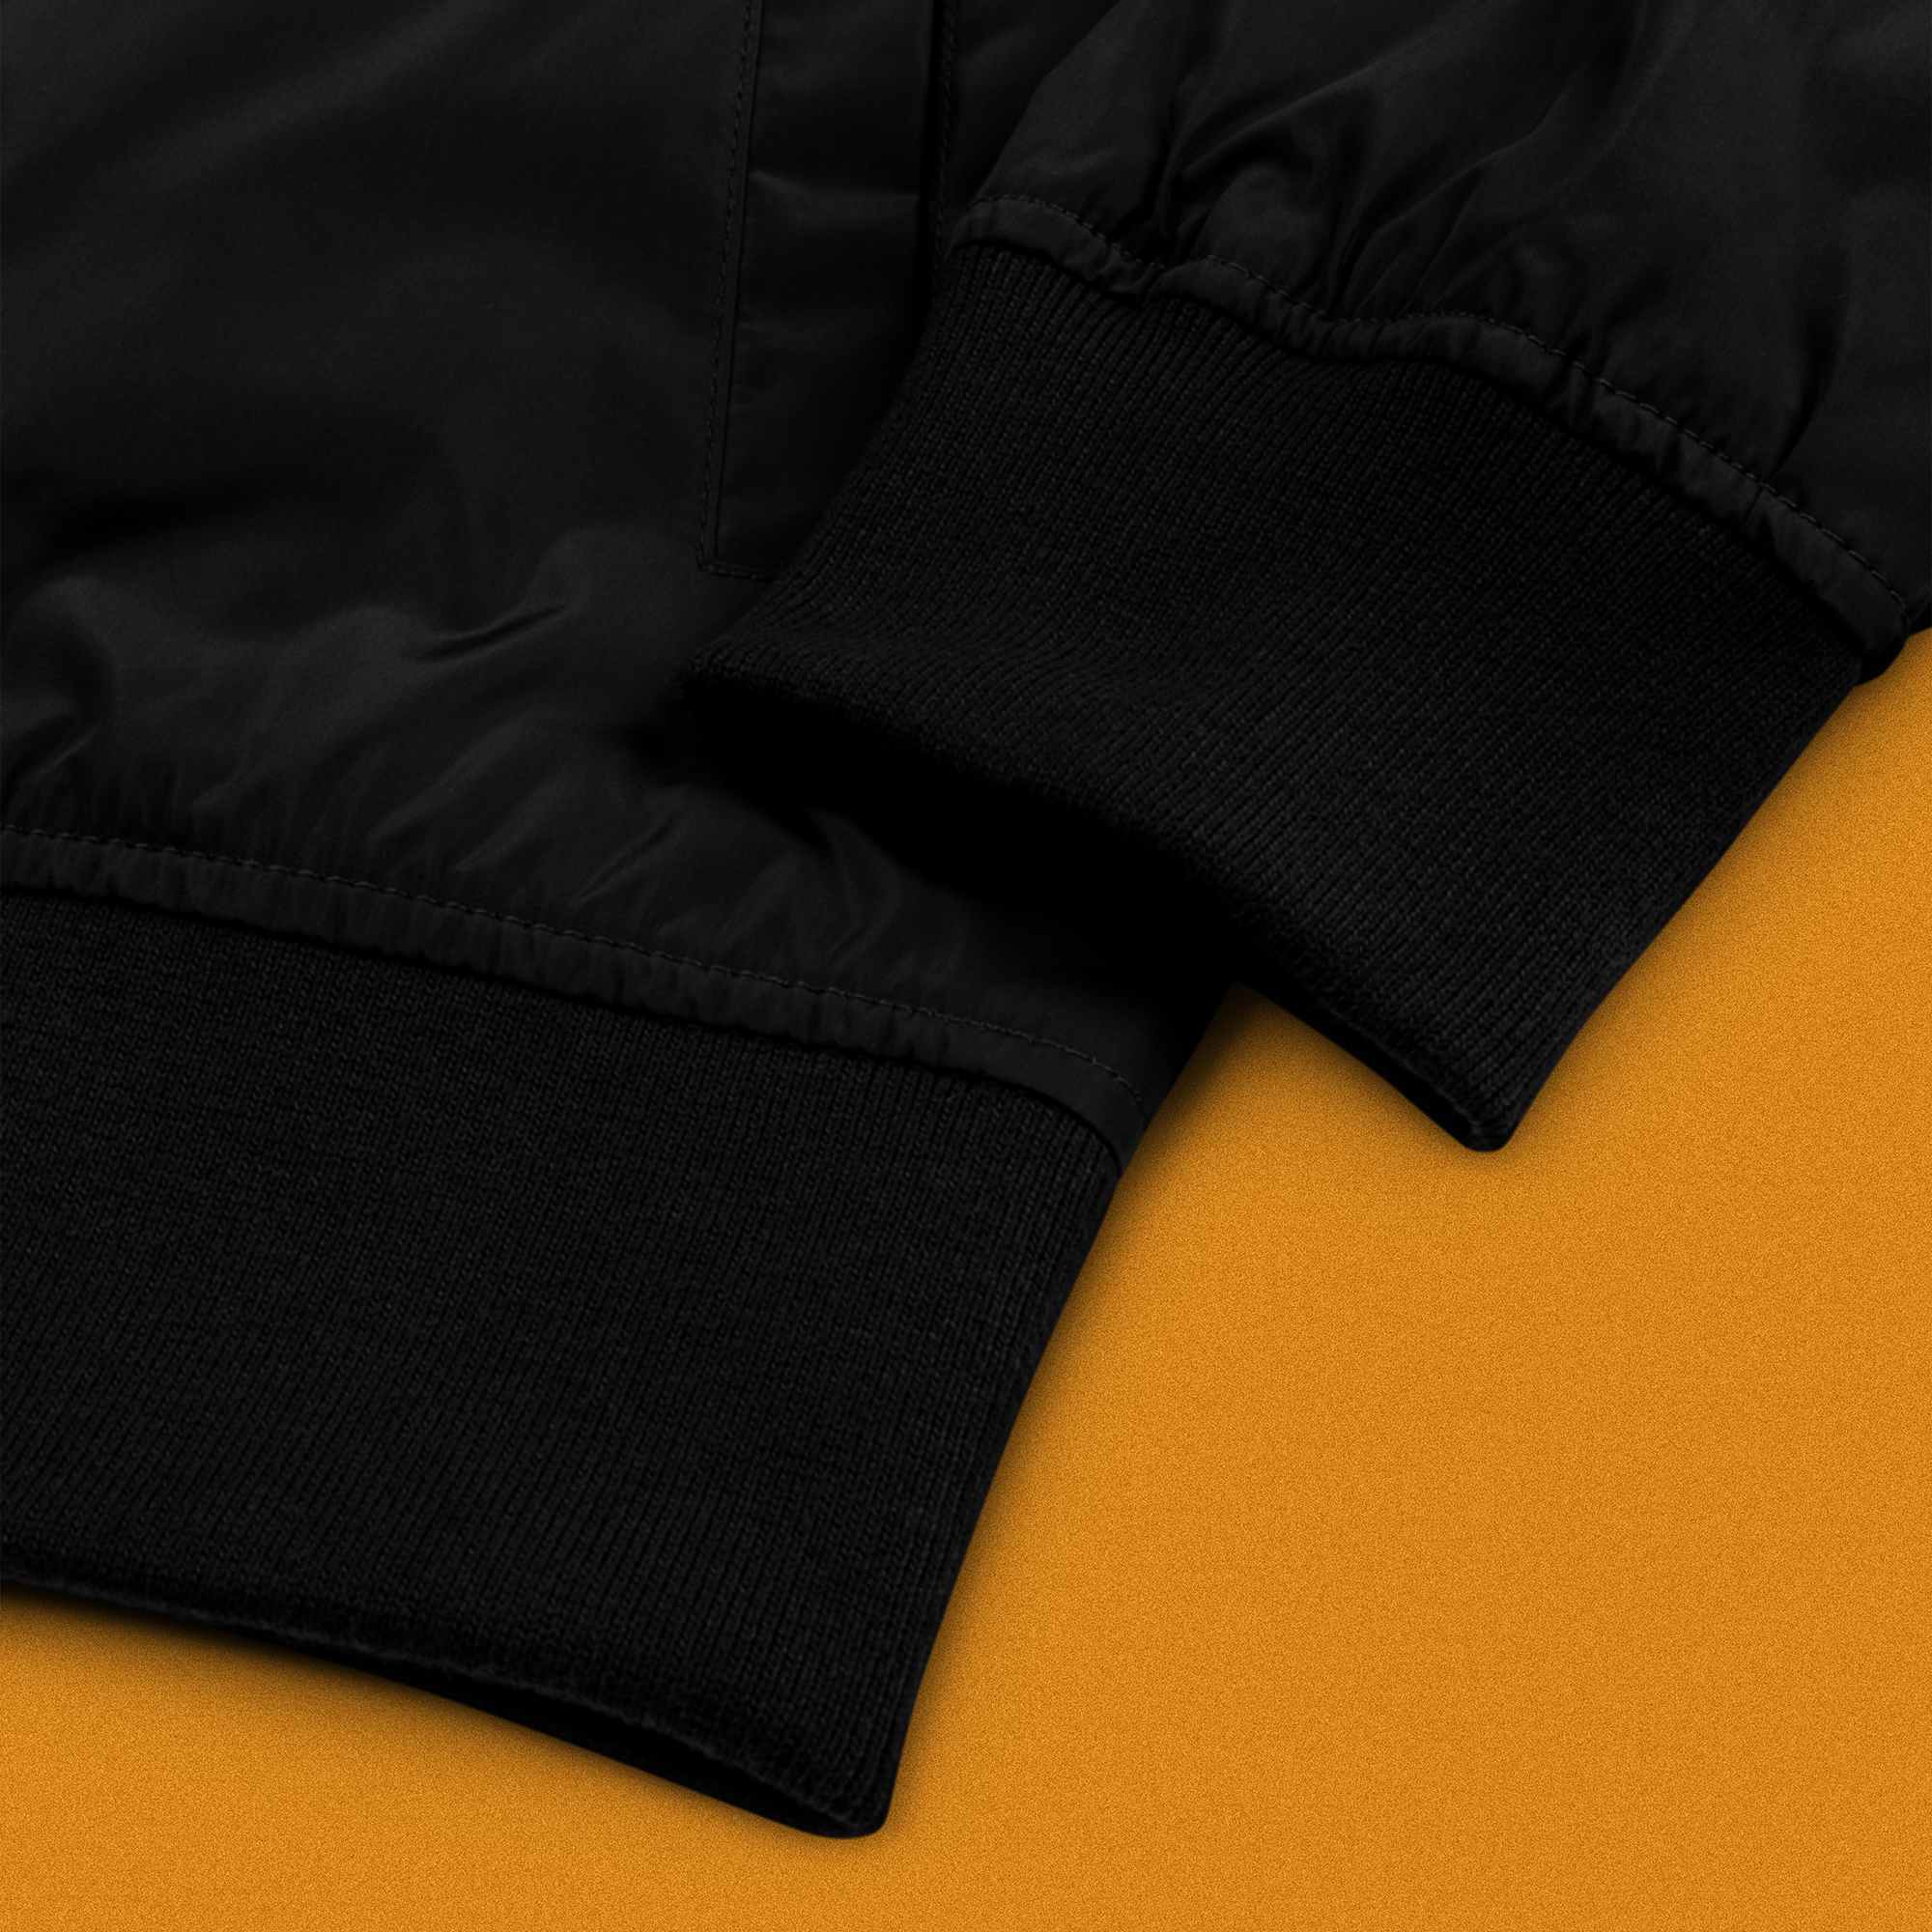 Bitcoin Dominance Bomber Jacket - Close up of sleeve cuff and hem.